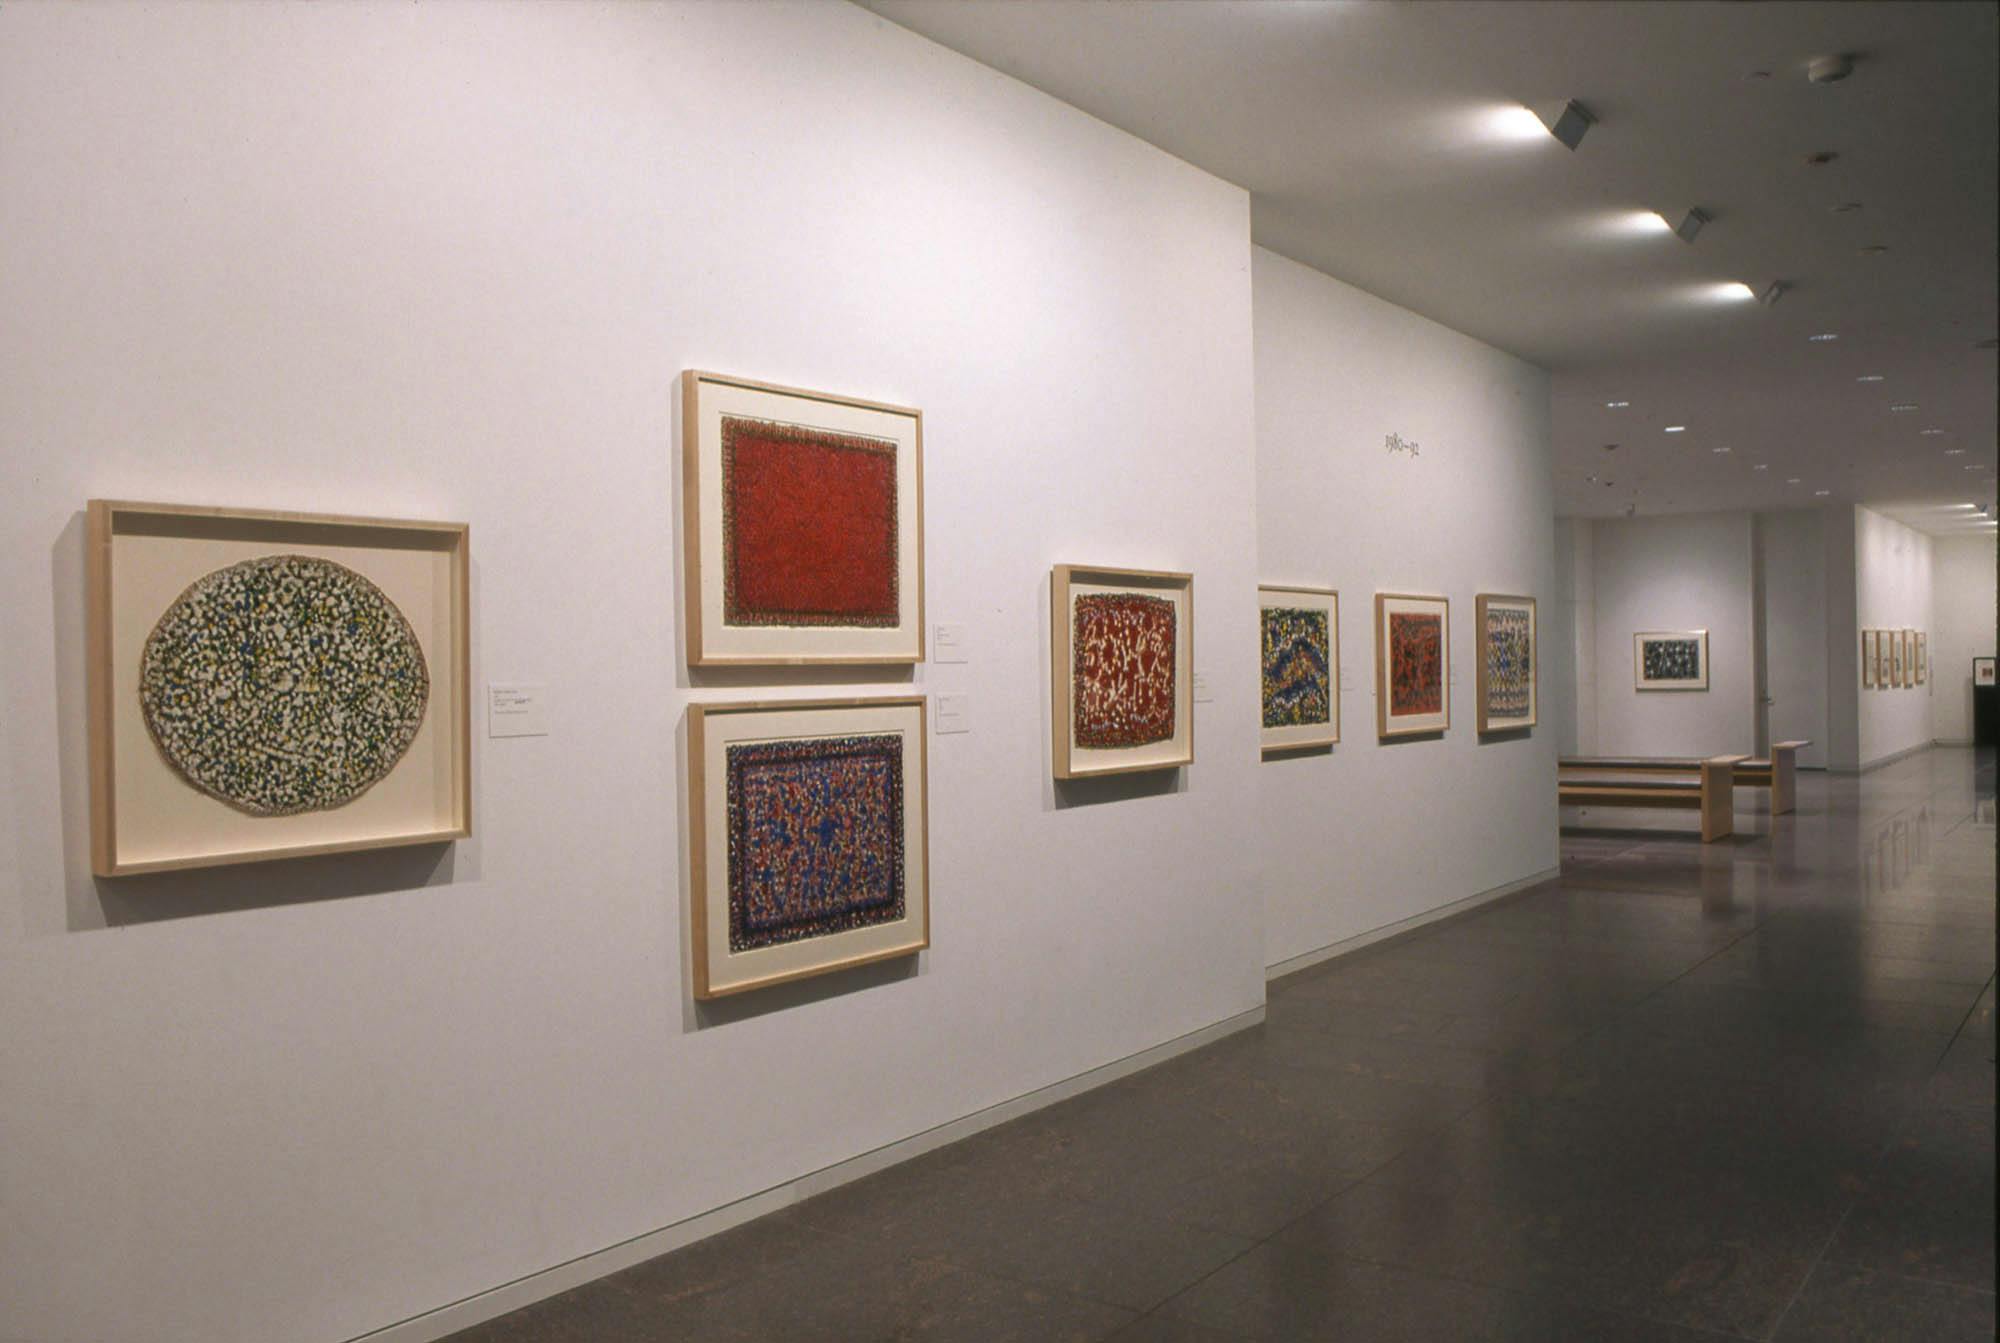  _The Living Edge: Richard Pousette-Dart (1916-1992) Works on Paper_, Schirn Kunsthalle, Frankfurt, Germany, 2001
 – The Richard Pousette-Dart Foundation